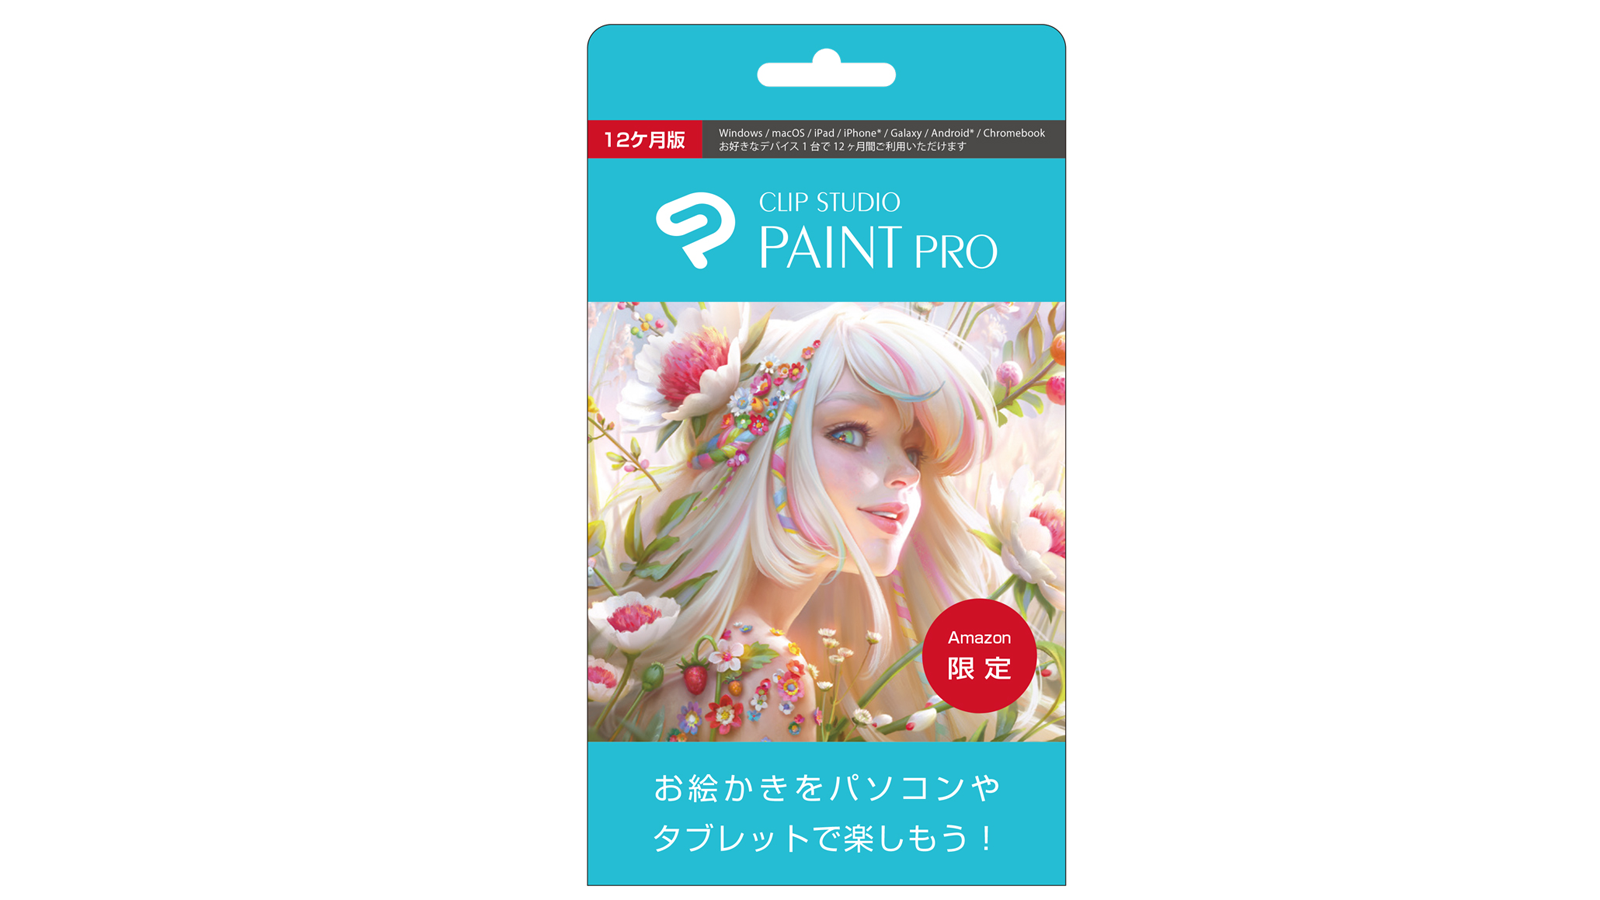 CLIP STUDIO PAINT PRO 1デバイス 12ヶ月 カード版をAmazon.co.jp限定で発売開始